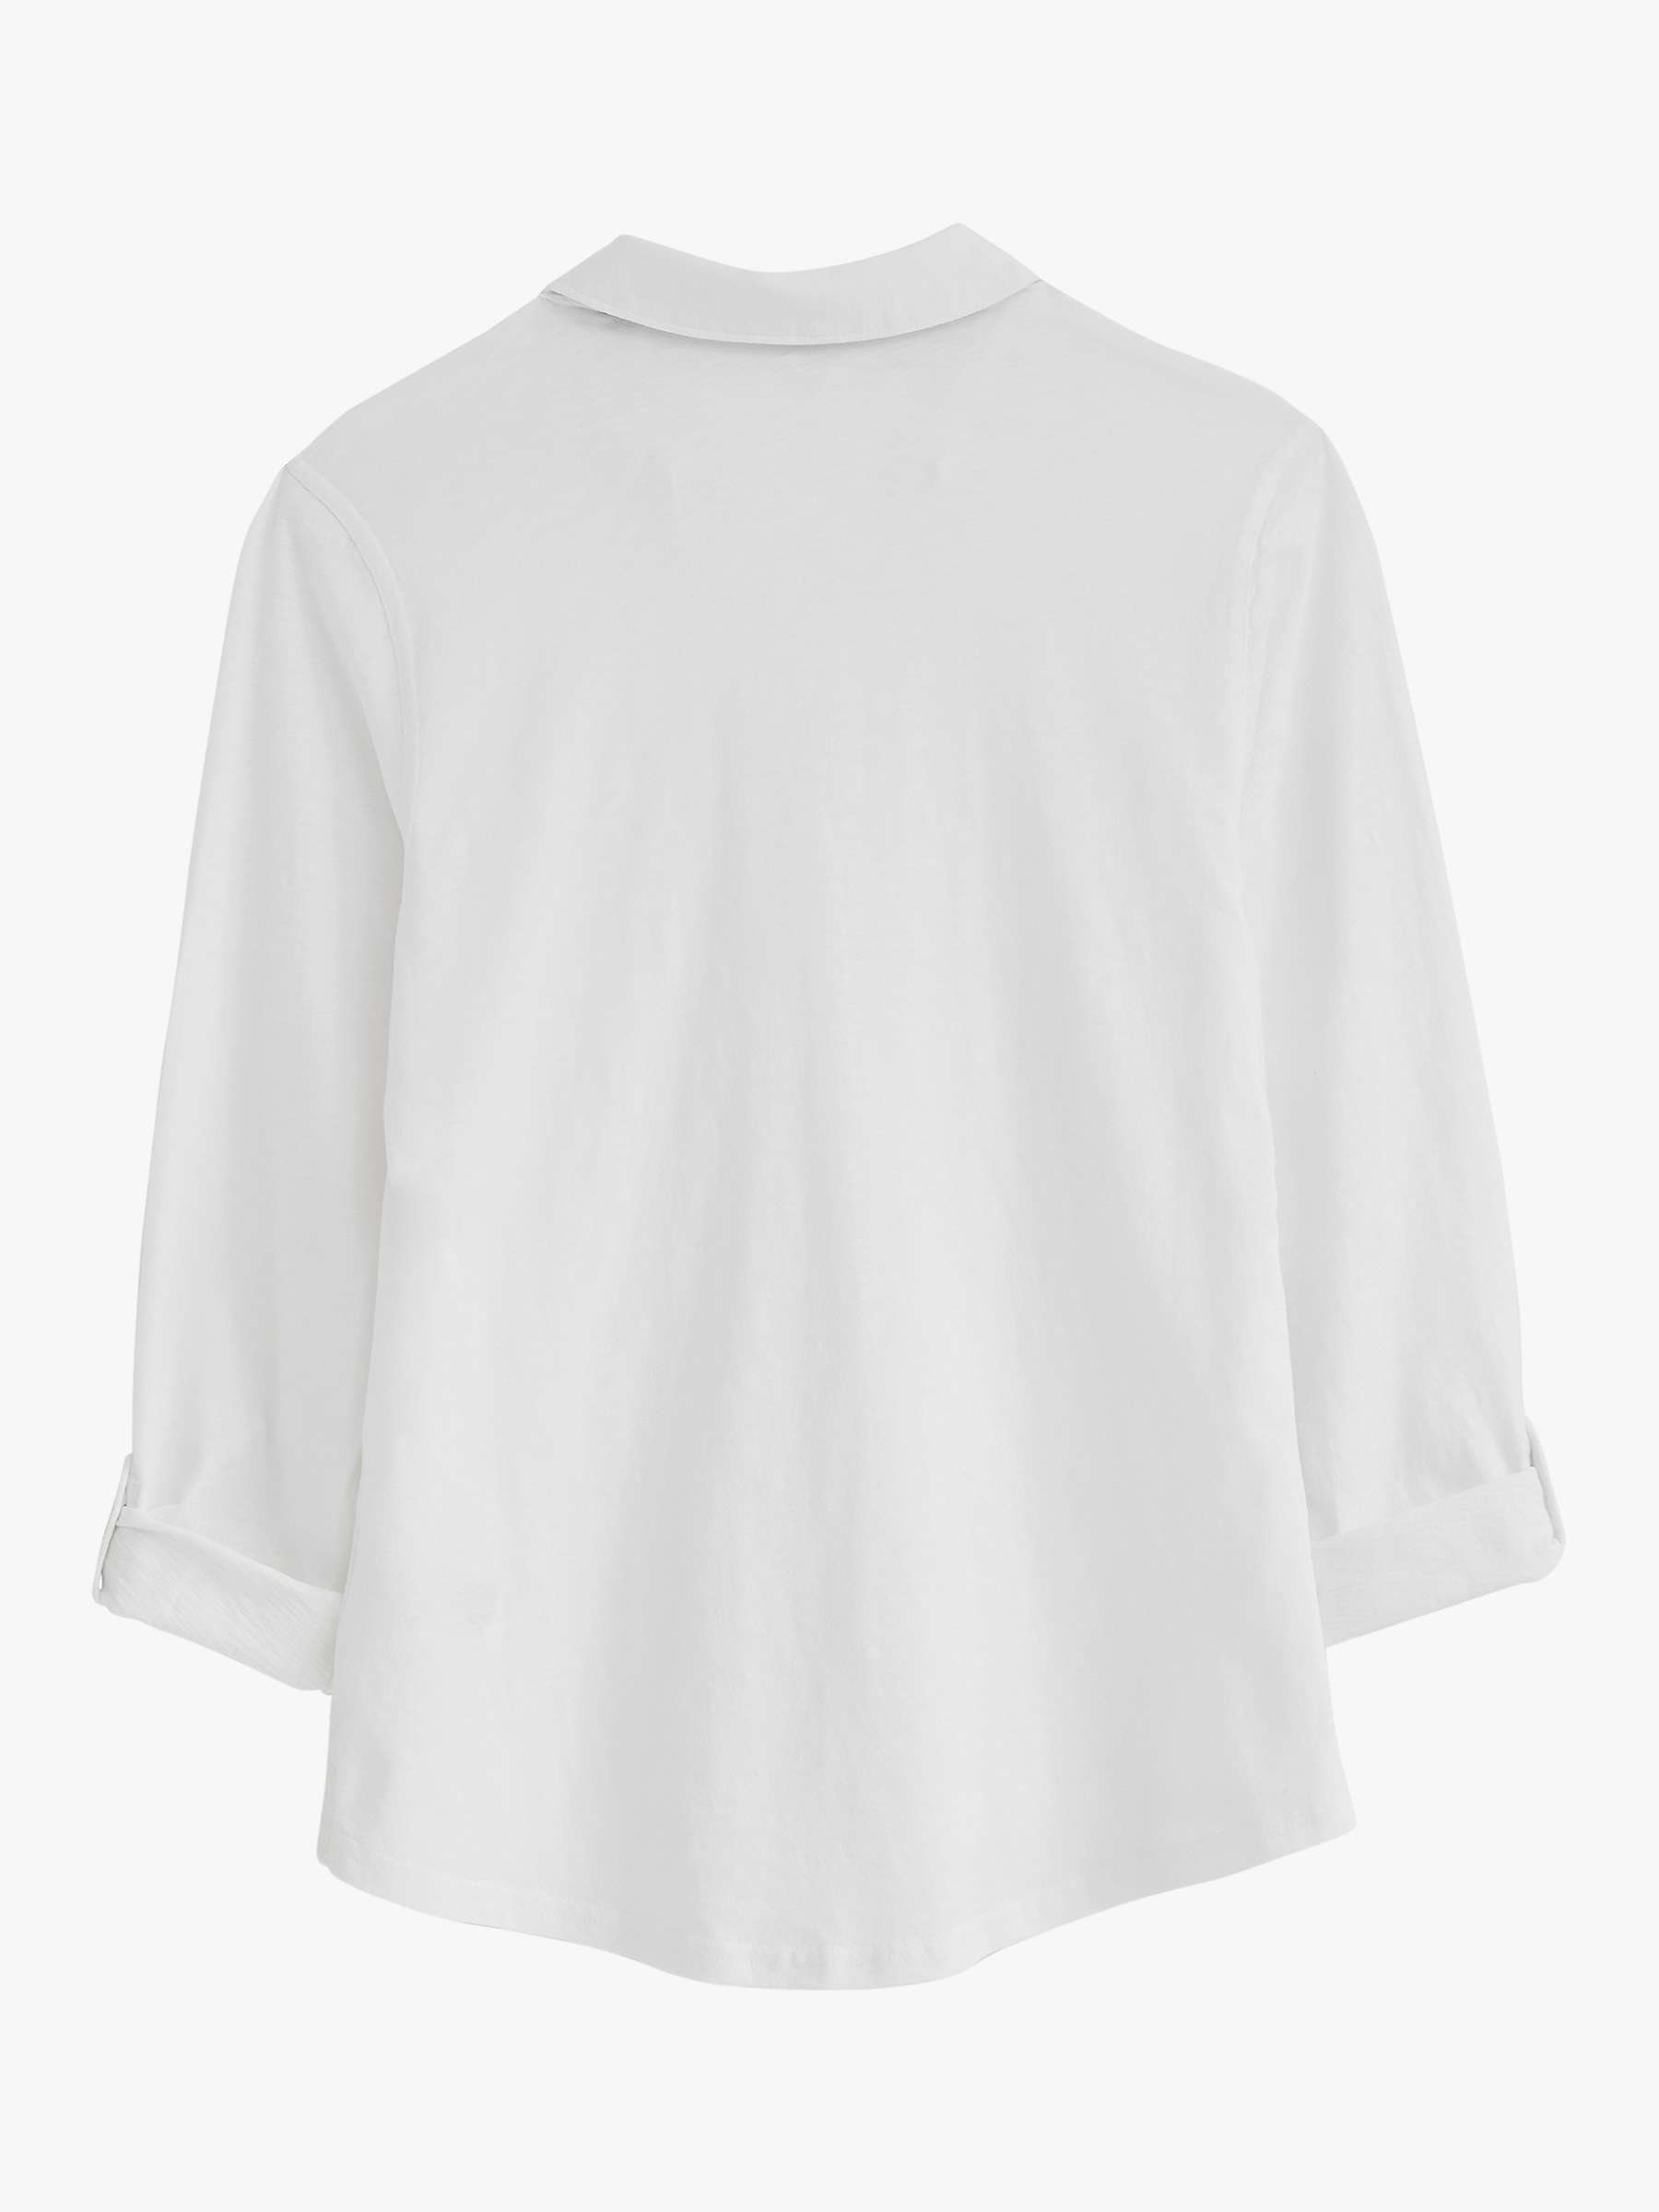 White Stuff Annie Jersey Shirt, Brilliant White at John Lewis & Partners